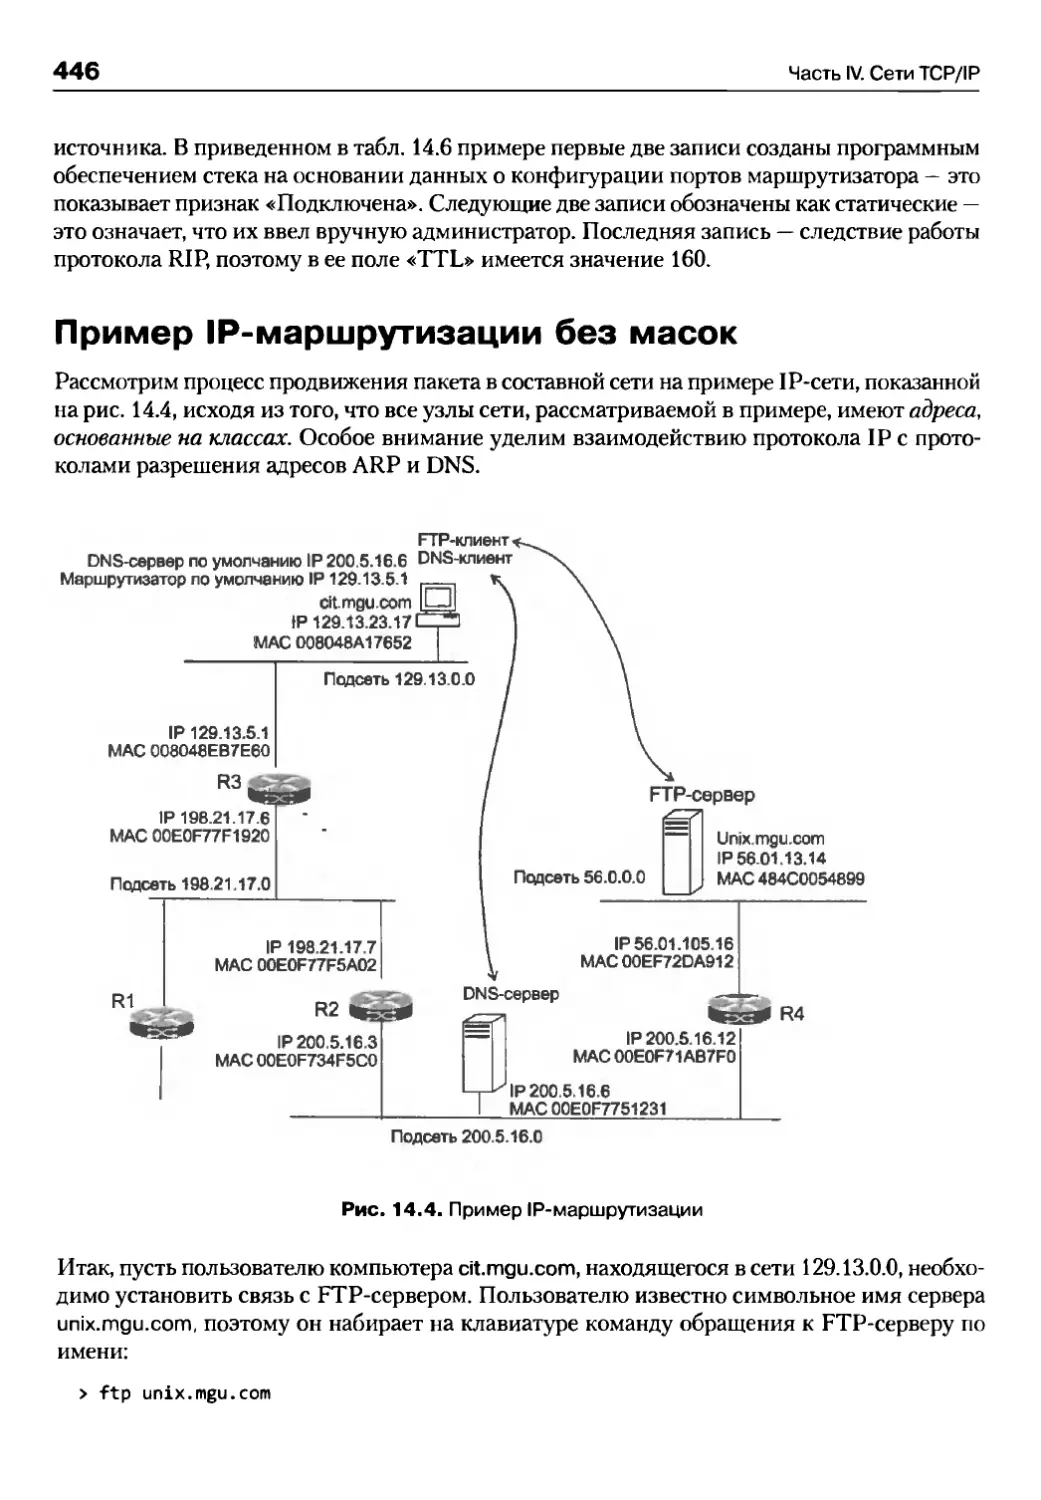 Пример IP-маршрутизации без масок